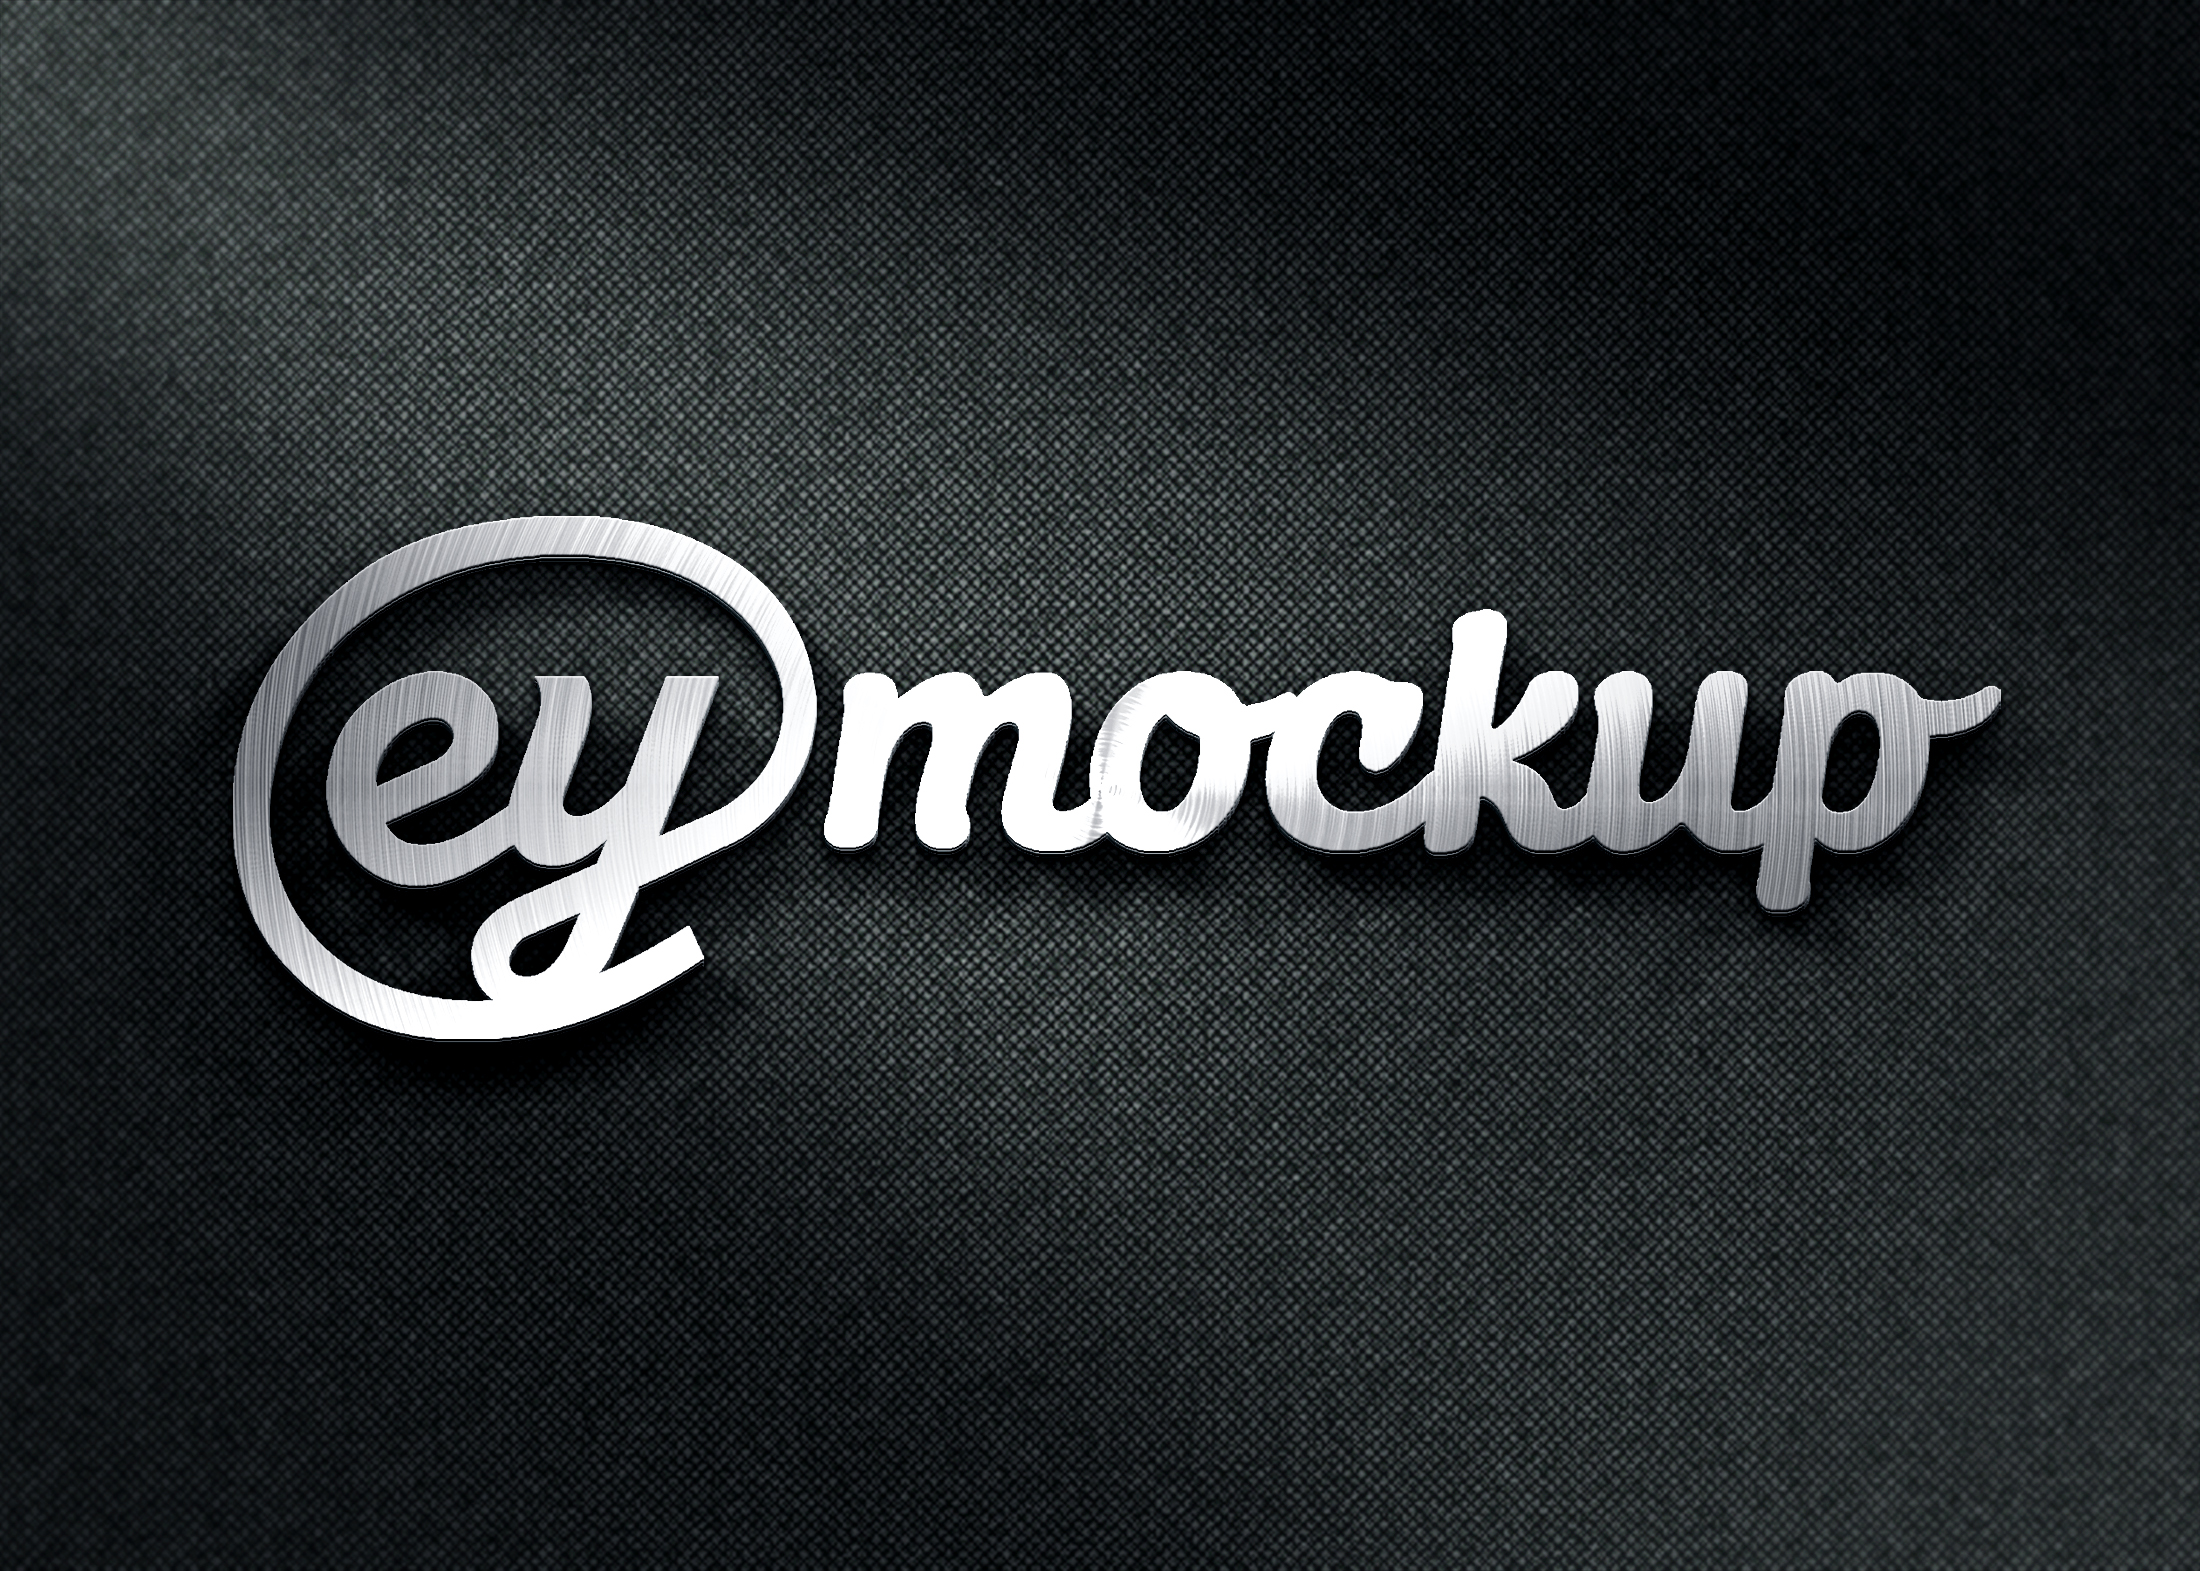 Eymockup 3D Silver Chrome Logo Mockup